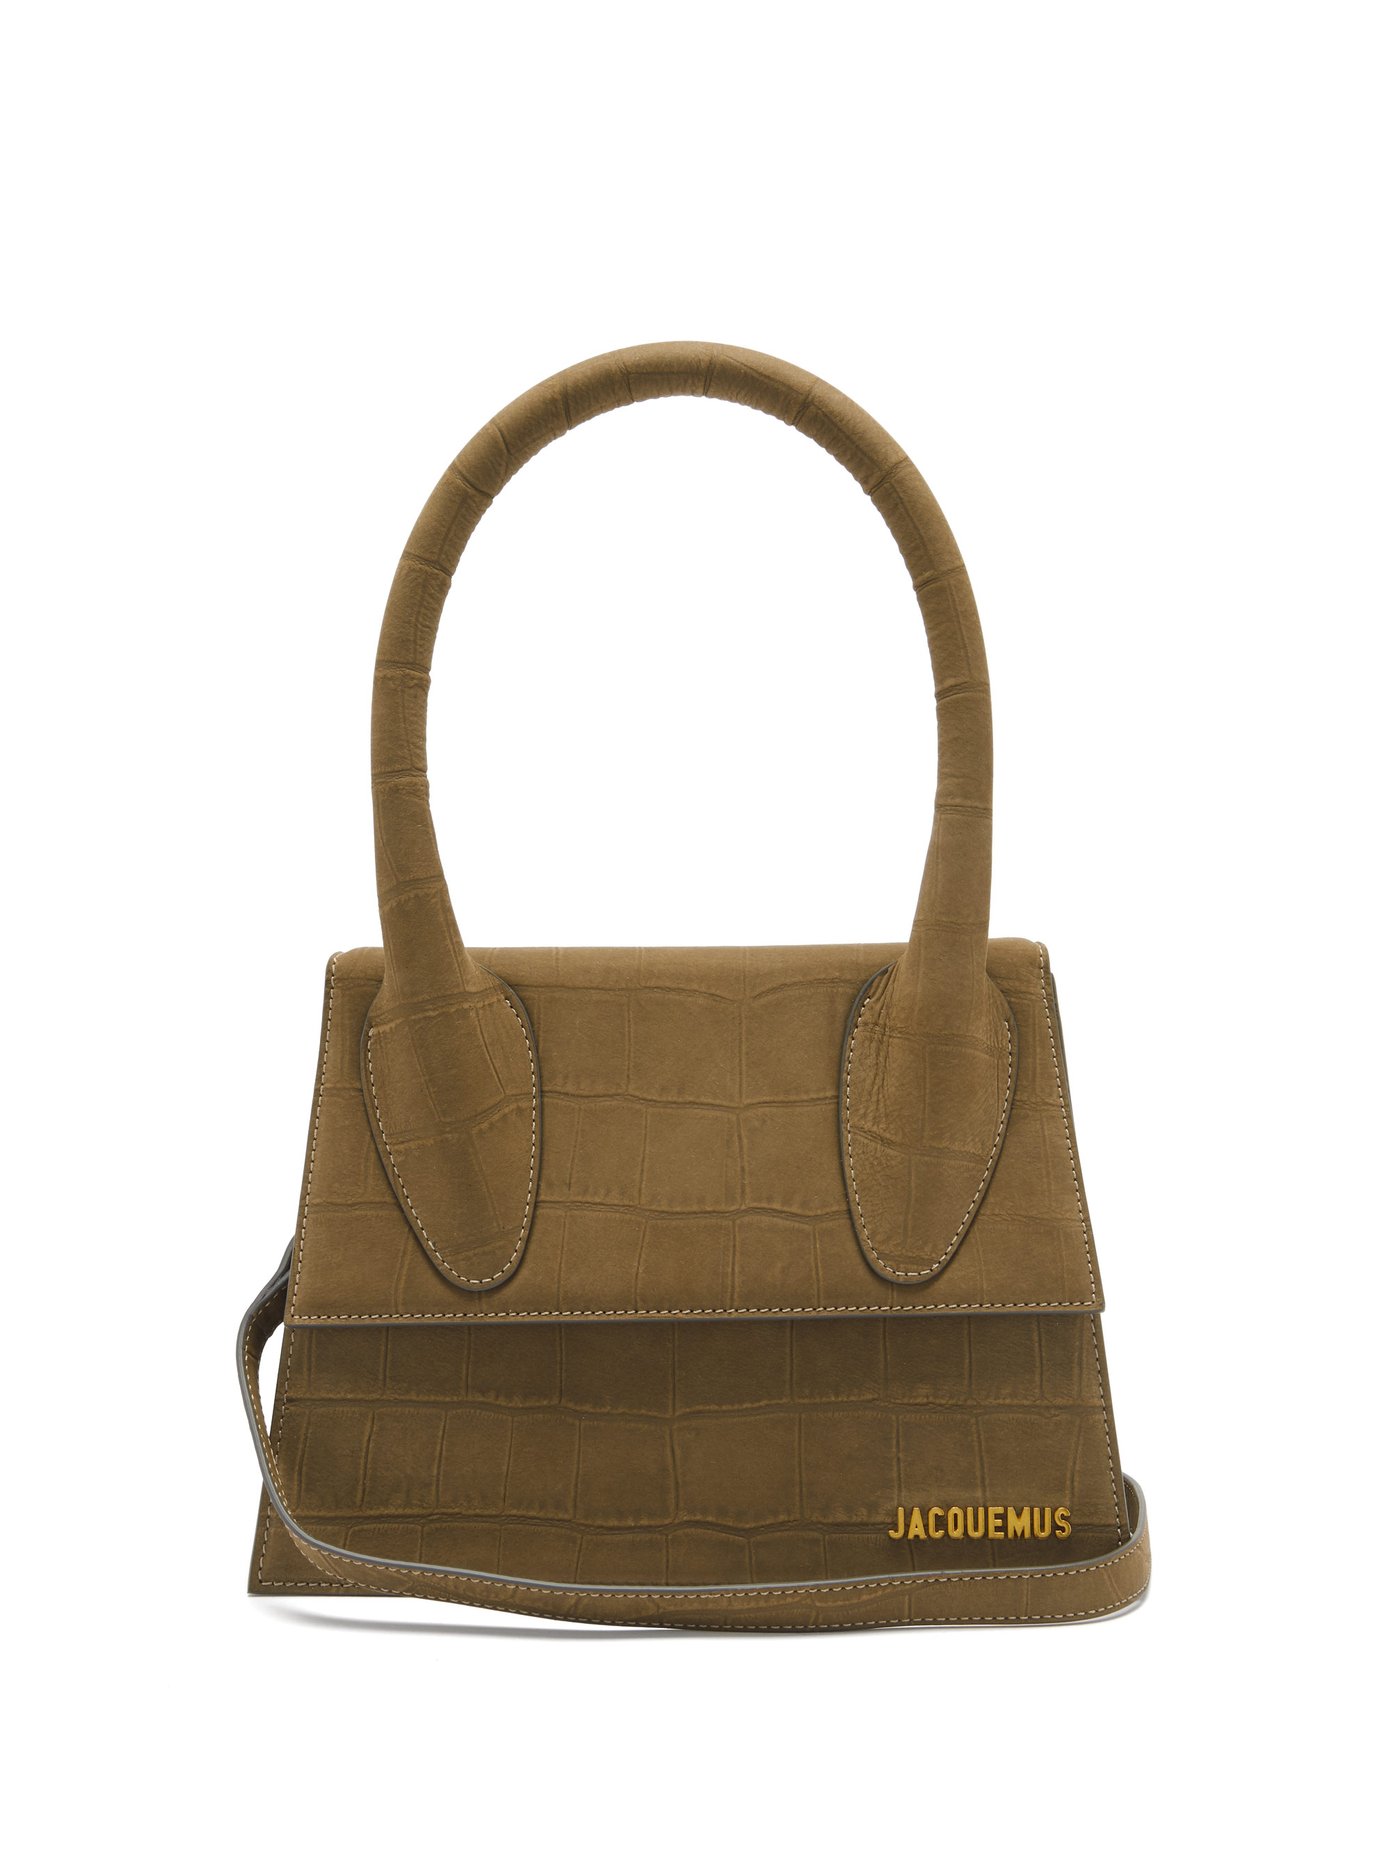 Jacquemus Handbag | IQS Executive